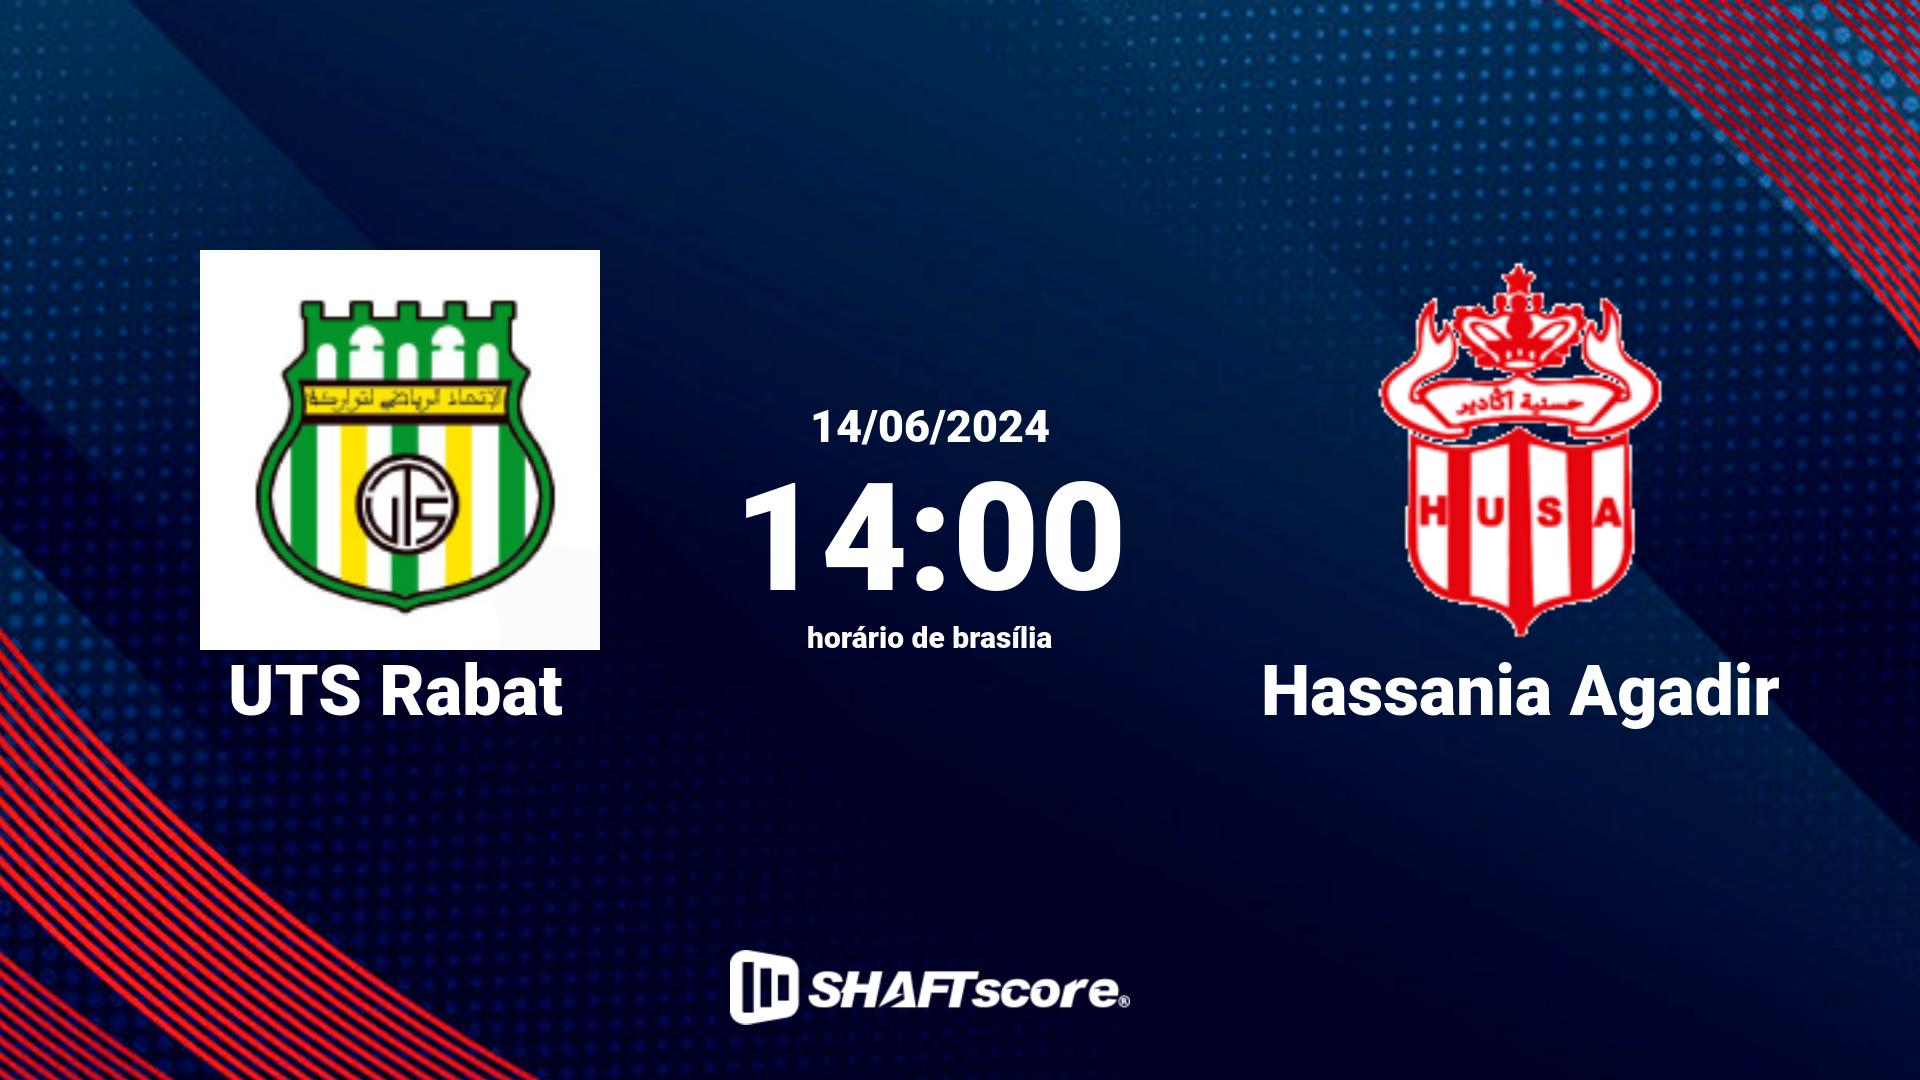 Estatísticas do jogo UTS Rabat vs Hassania Agadir 14.06 14:00